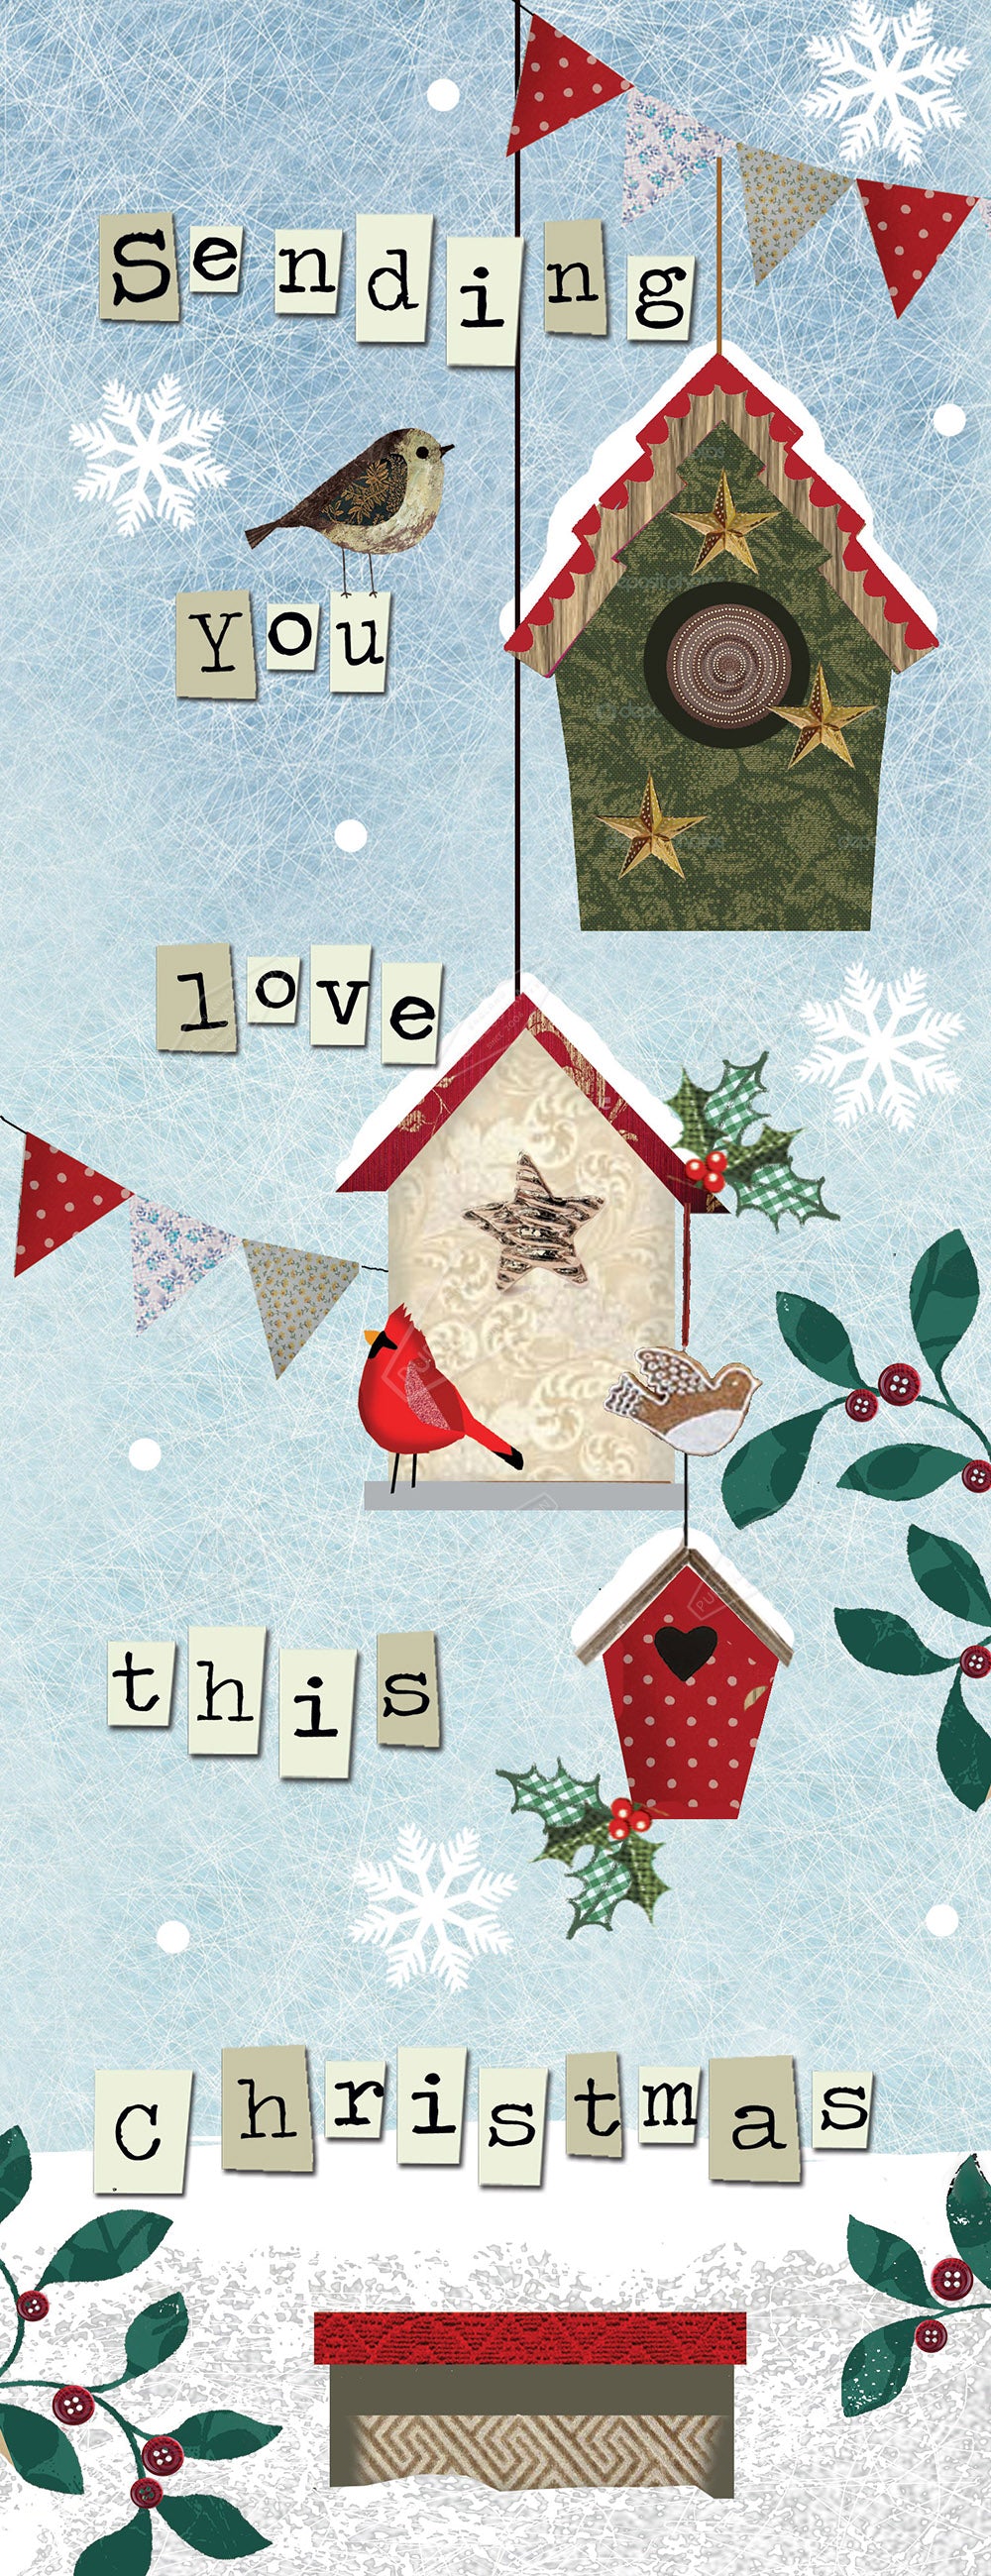 00027785DEV - Deva Evans is represented by Pure Art Licensing Agency - Christmas Greeting Card Design